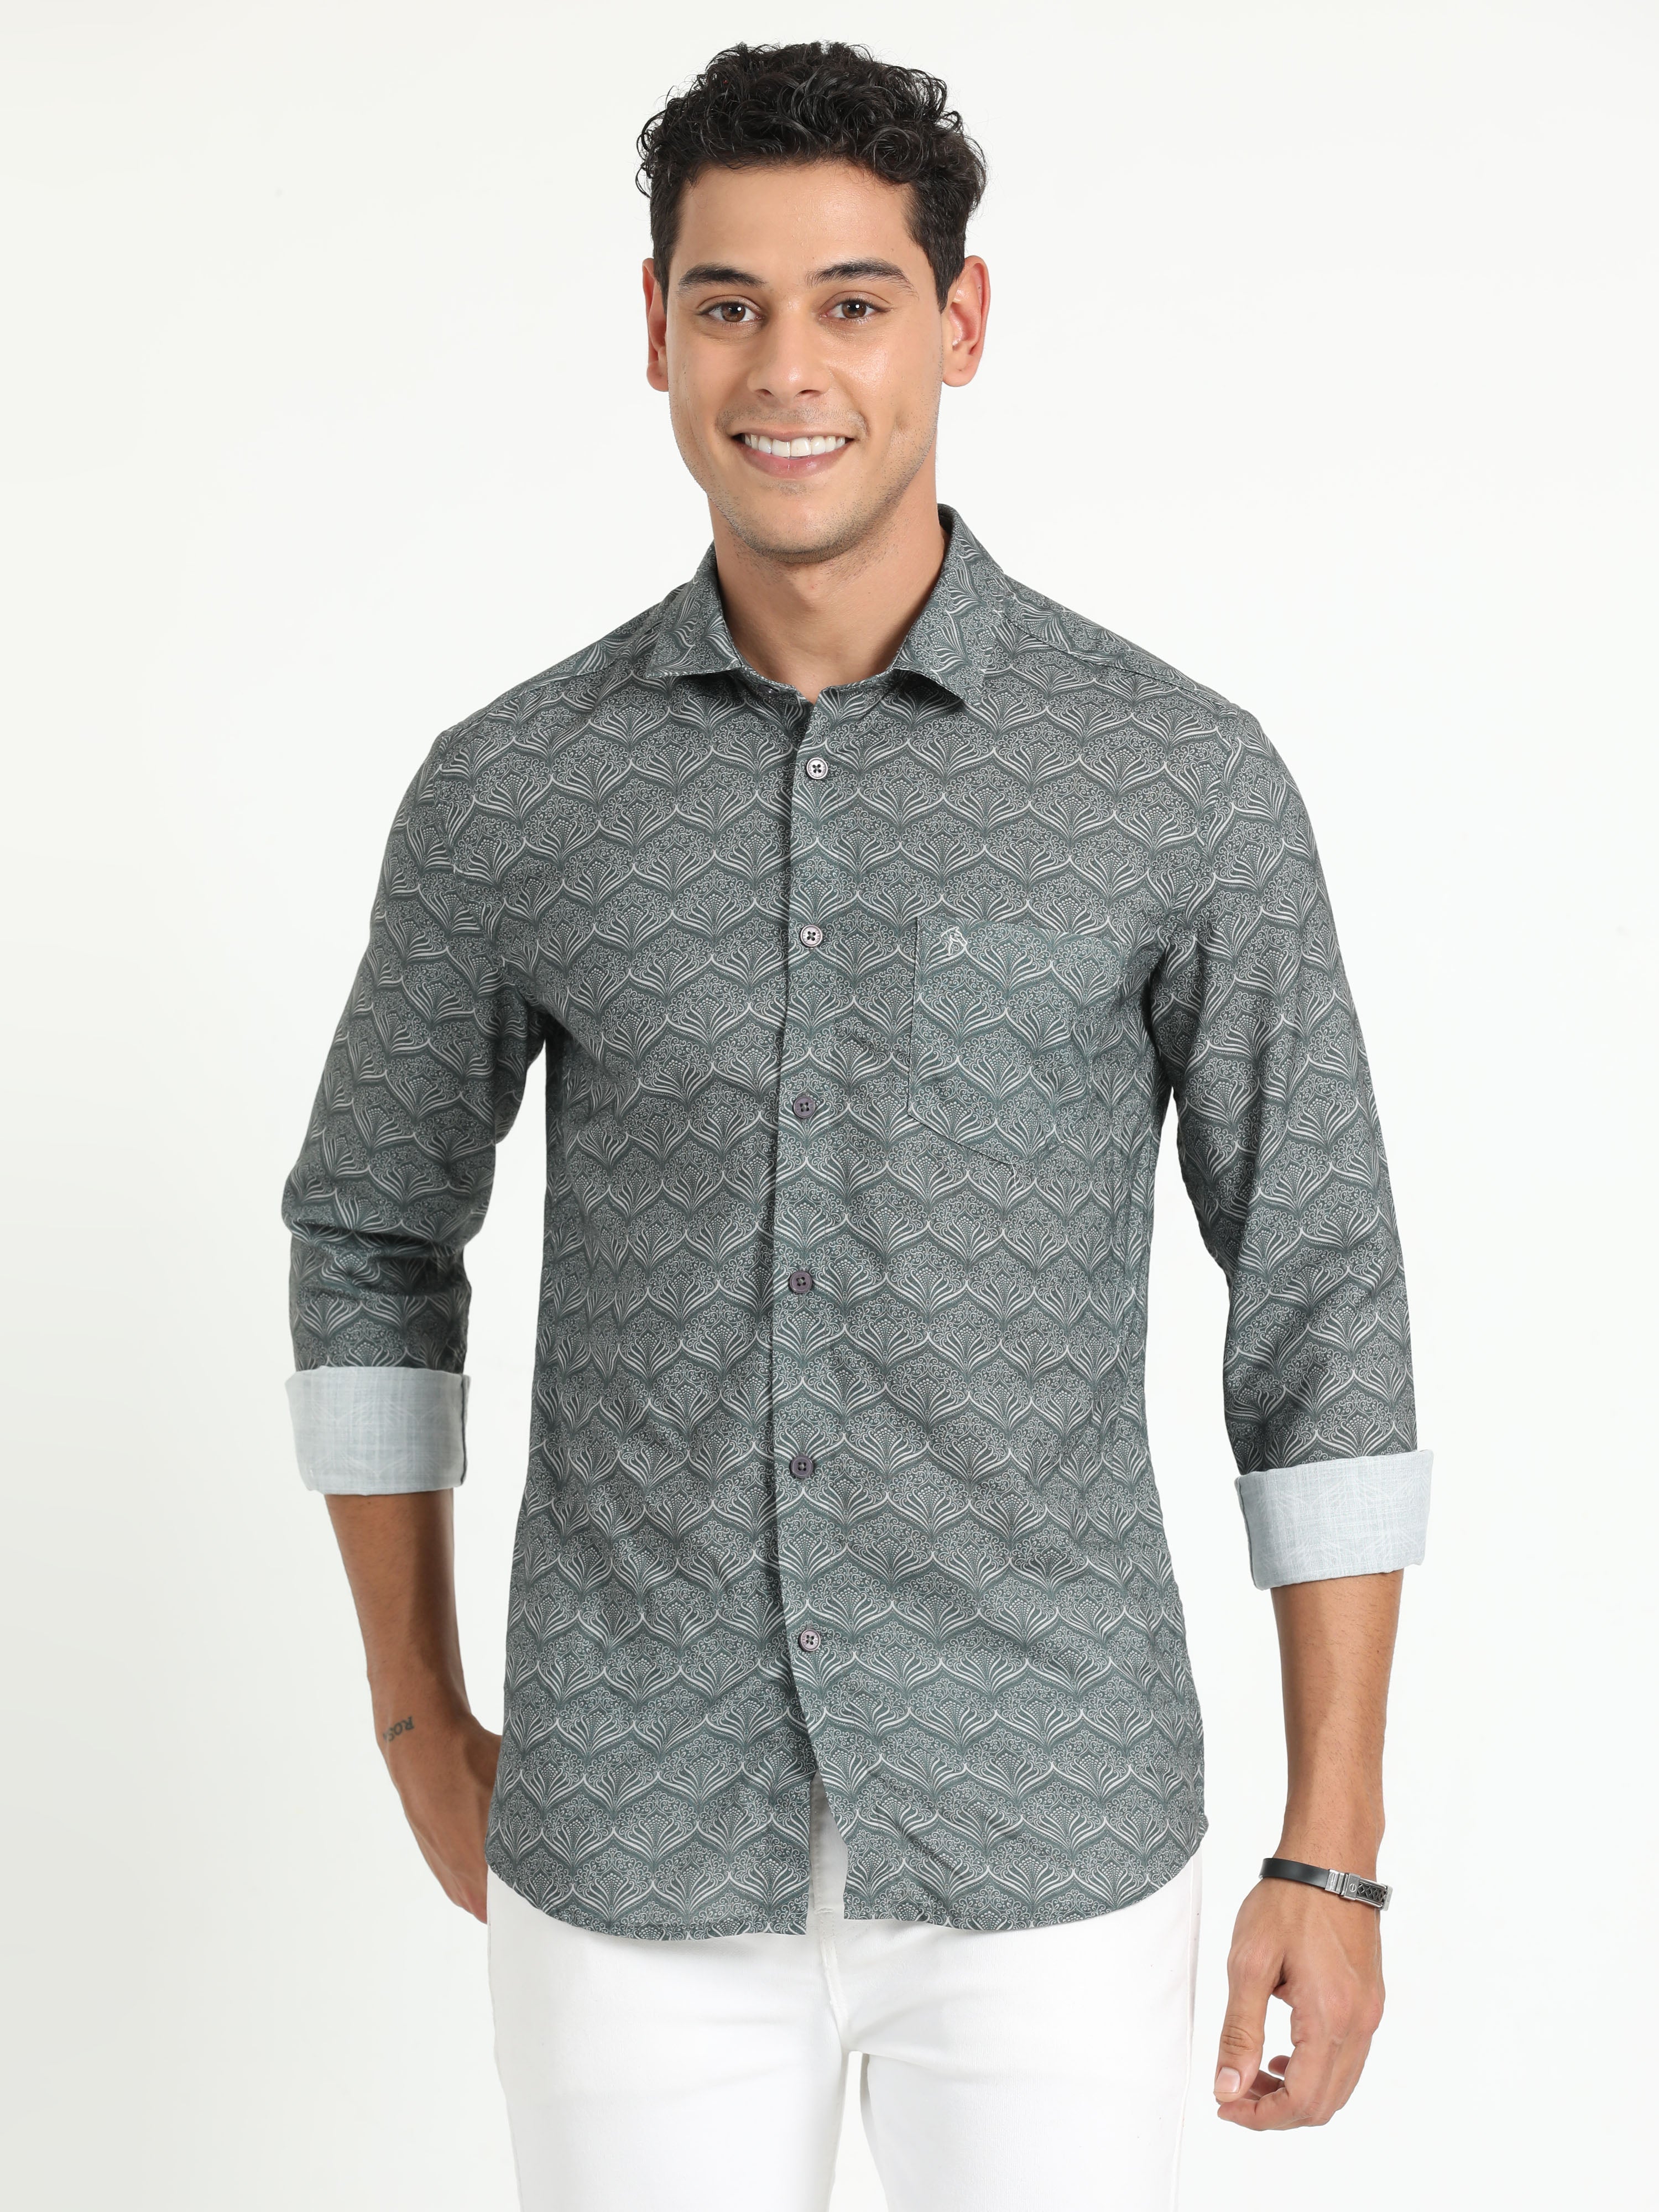 Cp Bro Men's Printed Grey Cotton Full Sleeve Woven Shirt | SBO2-70 A-FS-PRT-BSL